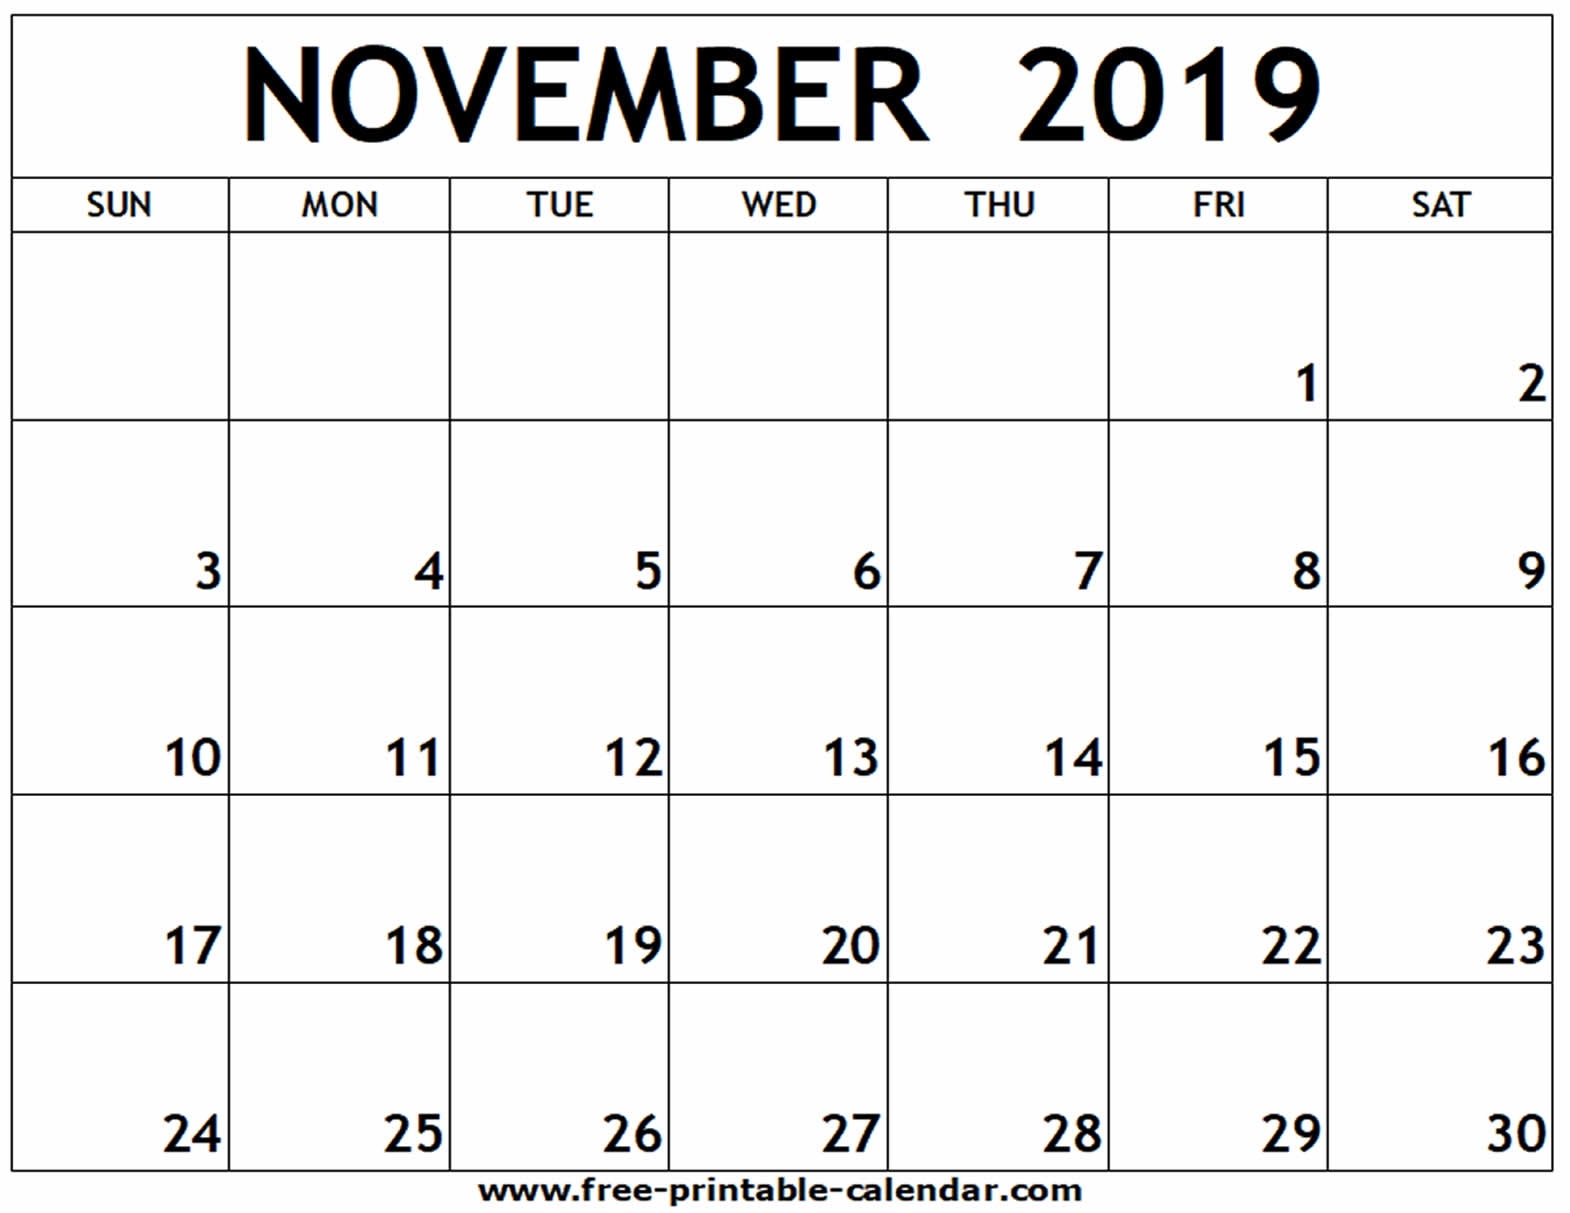 November 2019 Printable Calendar - Free-Printable-Calendar